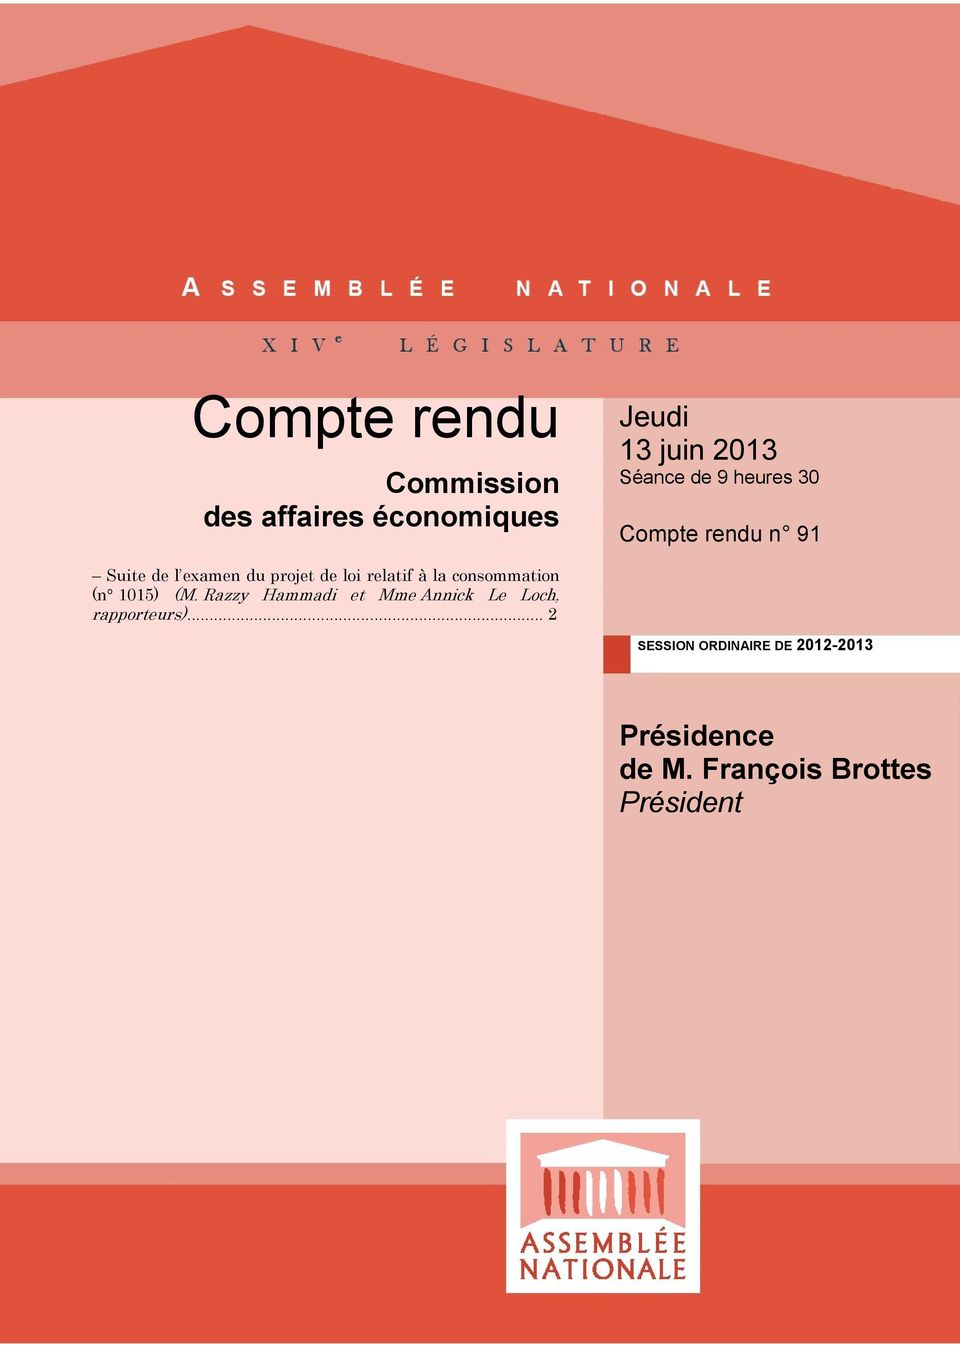 consommation (n 1015) (M. Razzy Hammadi et Mme Annick Le Loch, rapporteurs).